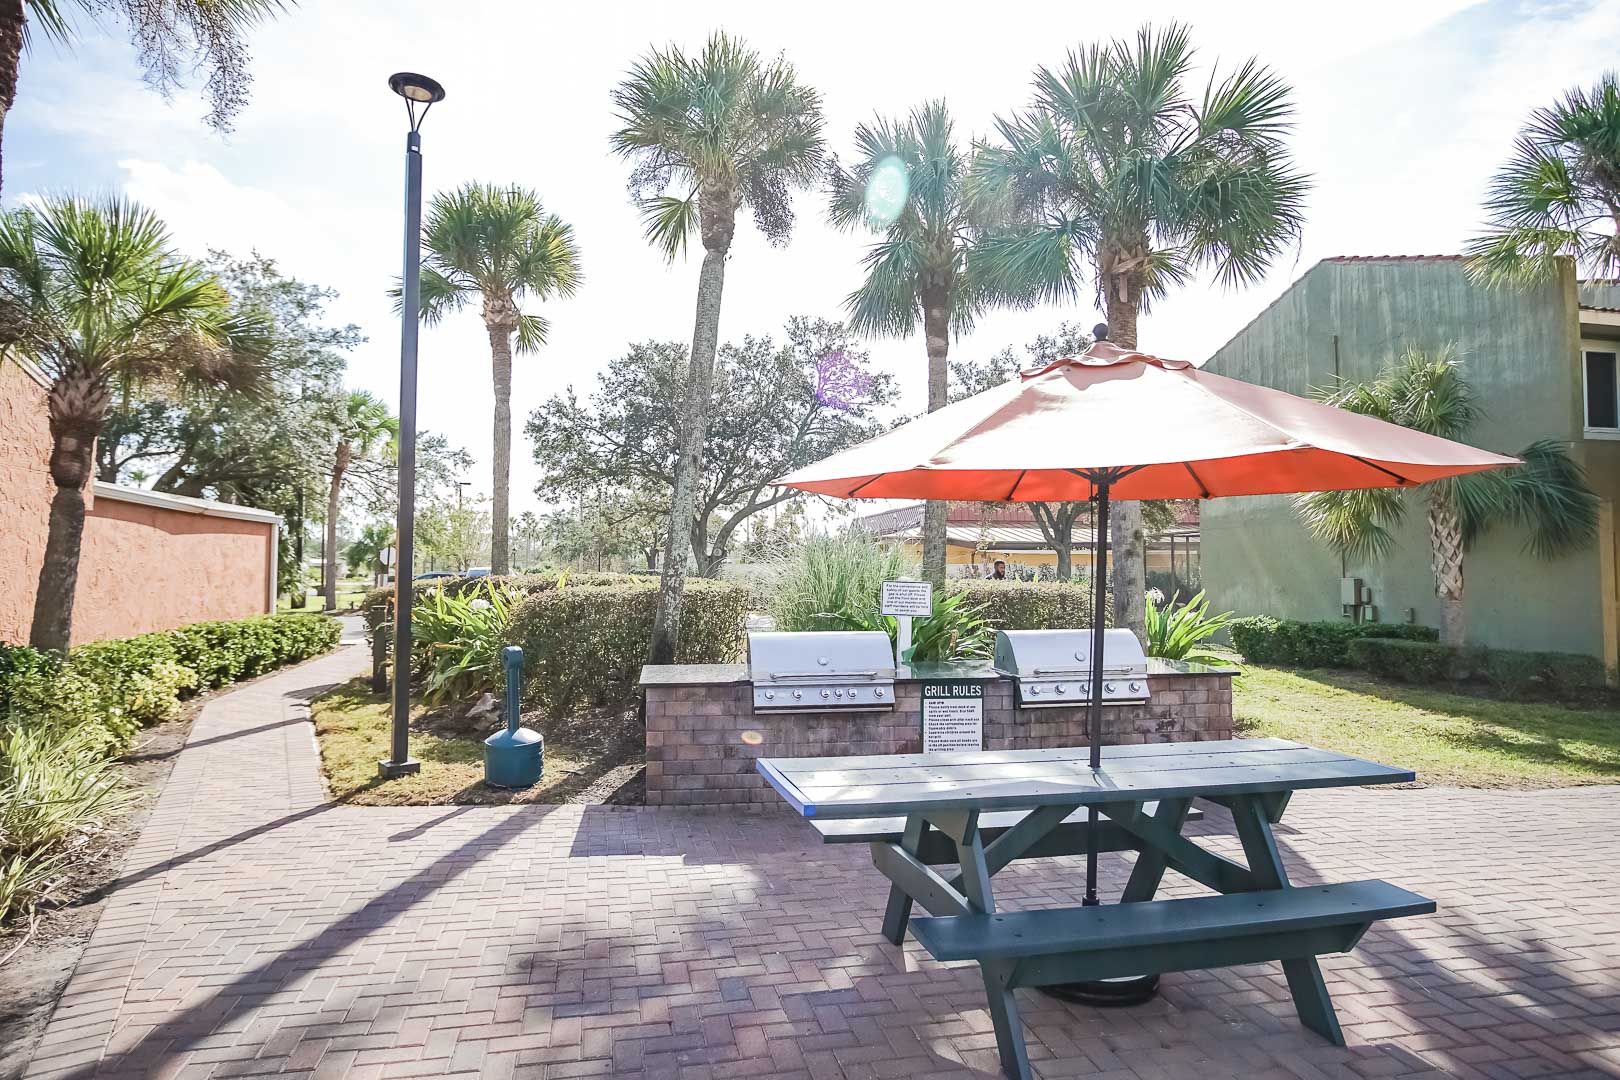 BBQ grills and sitting area at VRI's Fantasy World Resort in Florida.